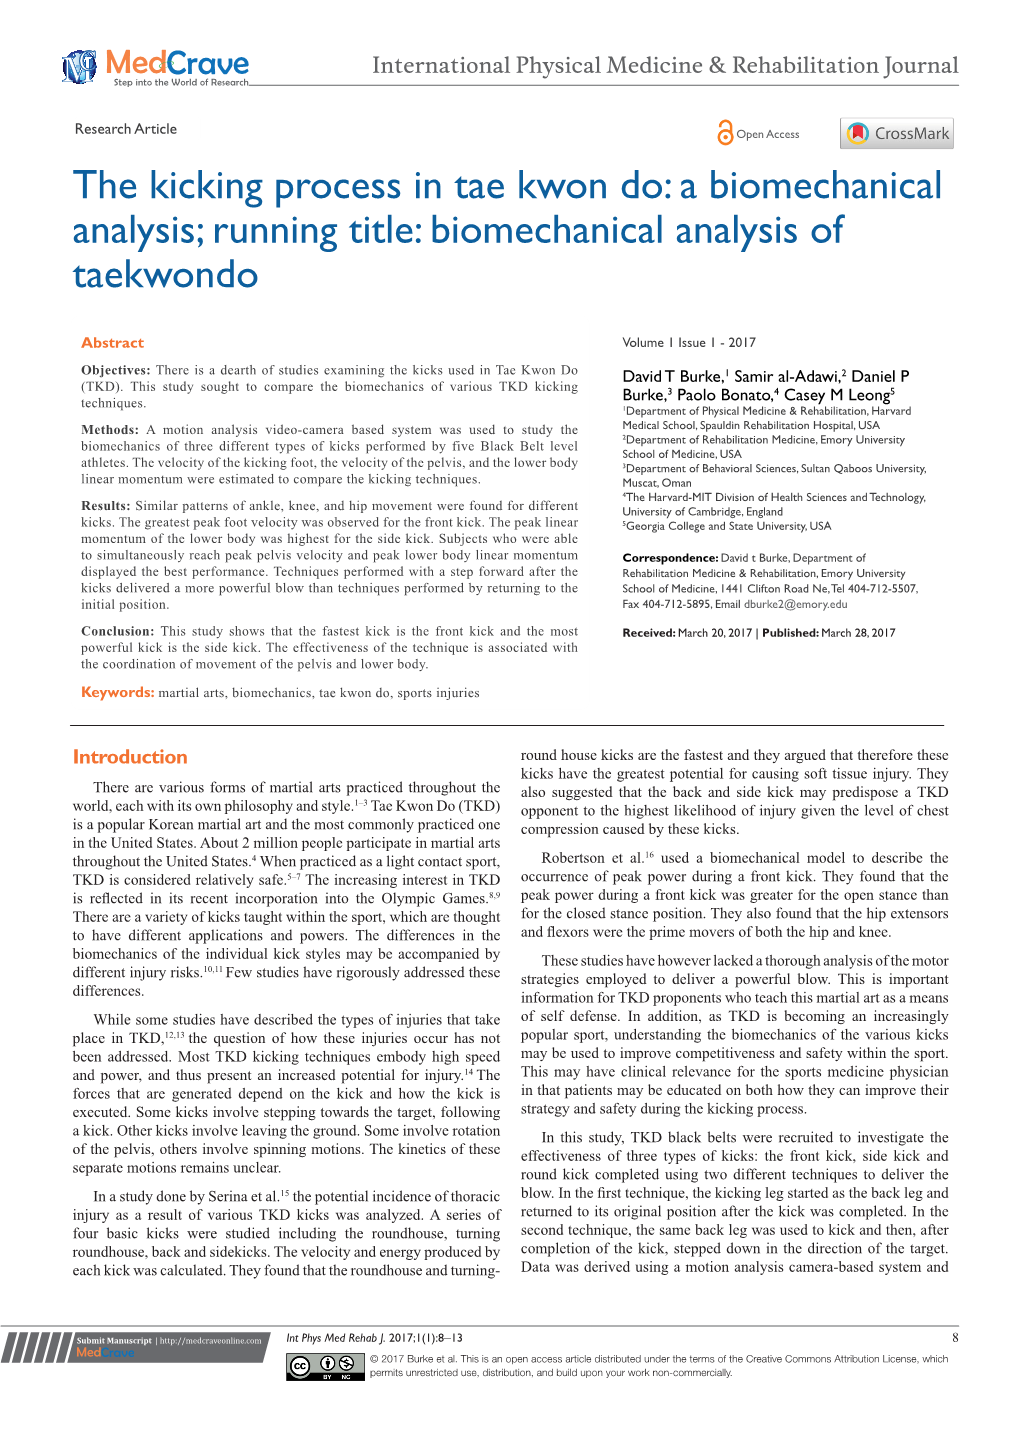 Biomechanical Analysis of Taekwondo